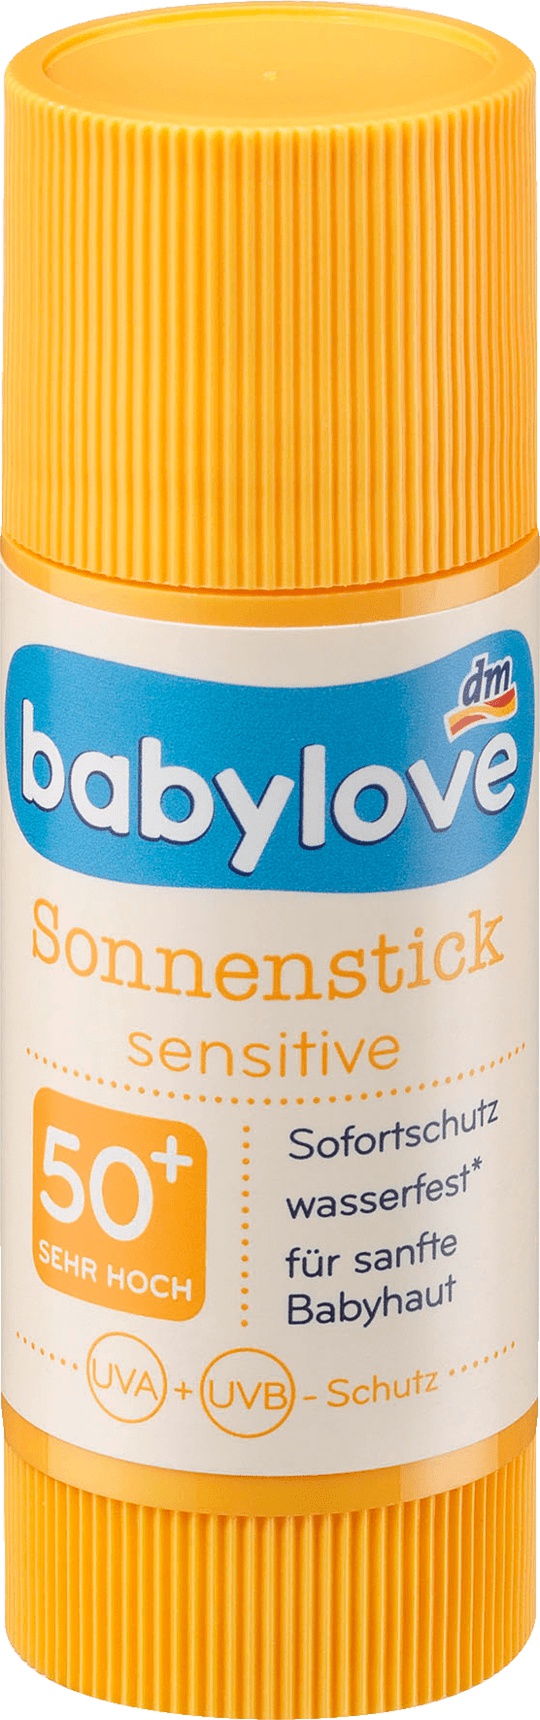 Babylove Sensitive Sonnenstick Lsf 50+